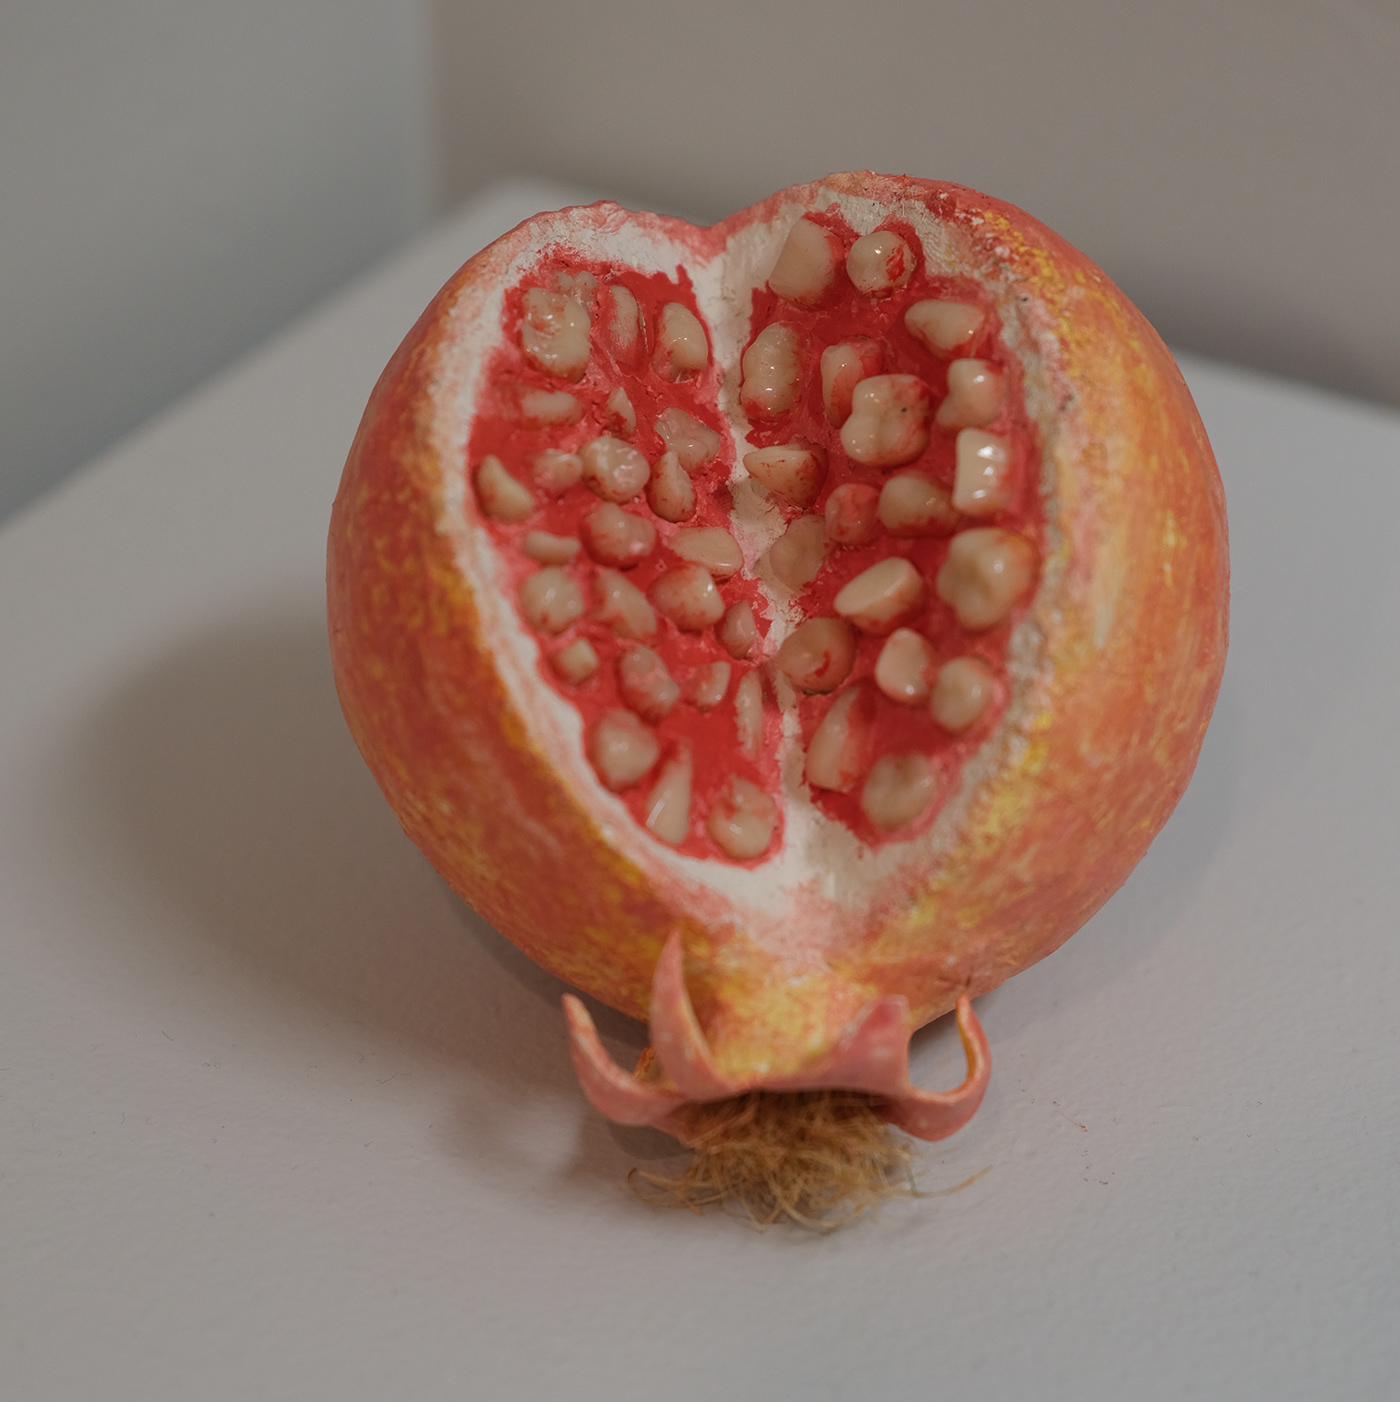 forbidden fruit Fruit pomegranate teeth bone human monster Mouth sculpting 